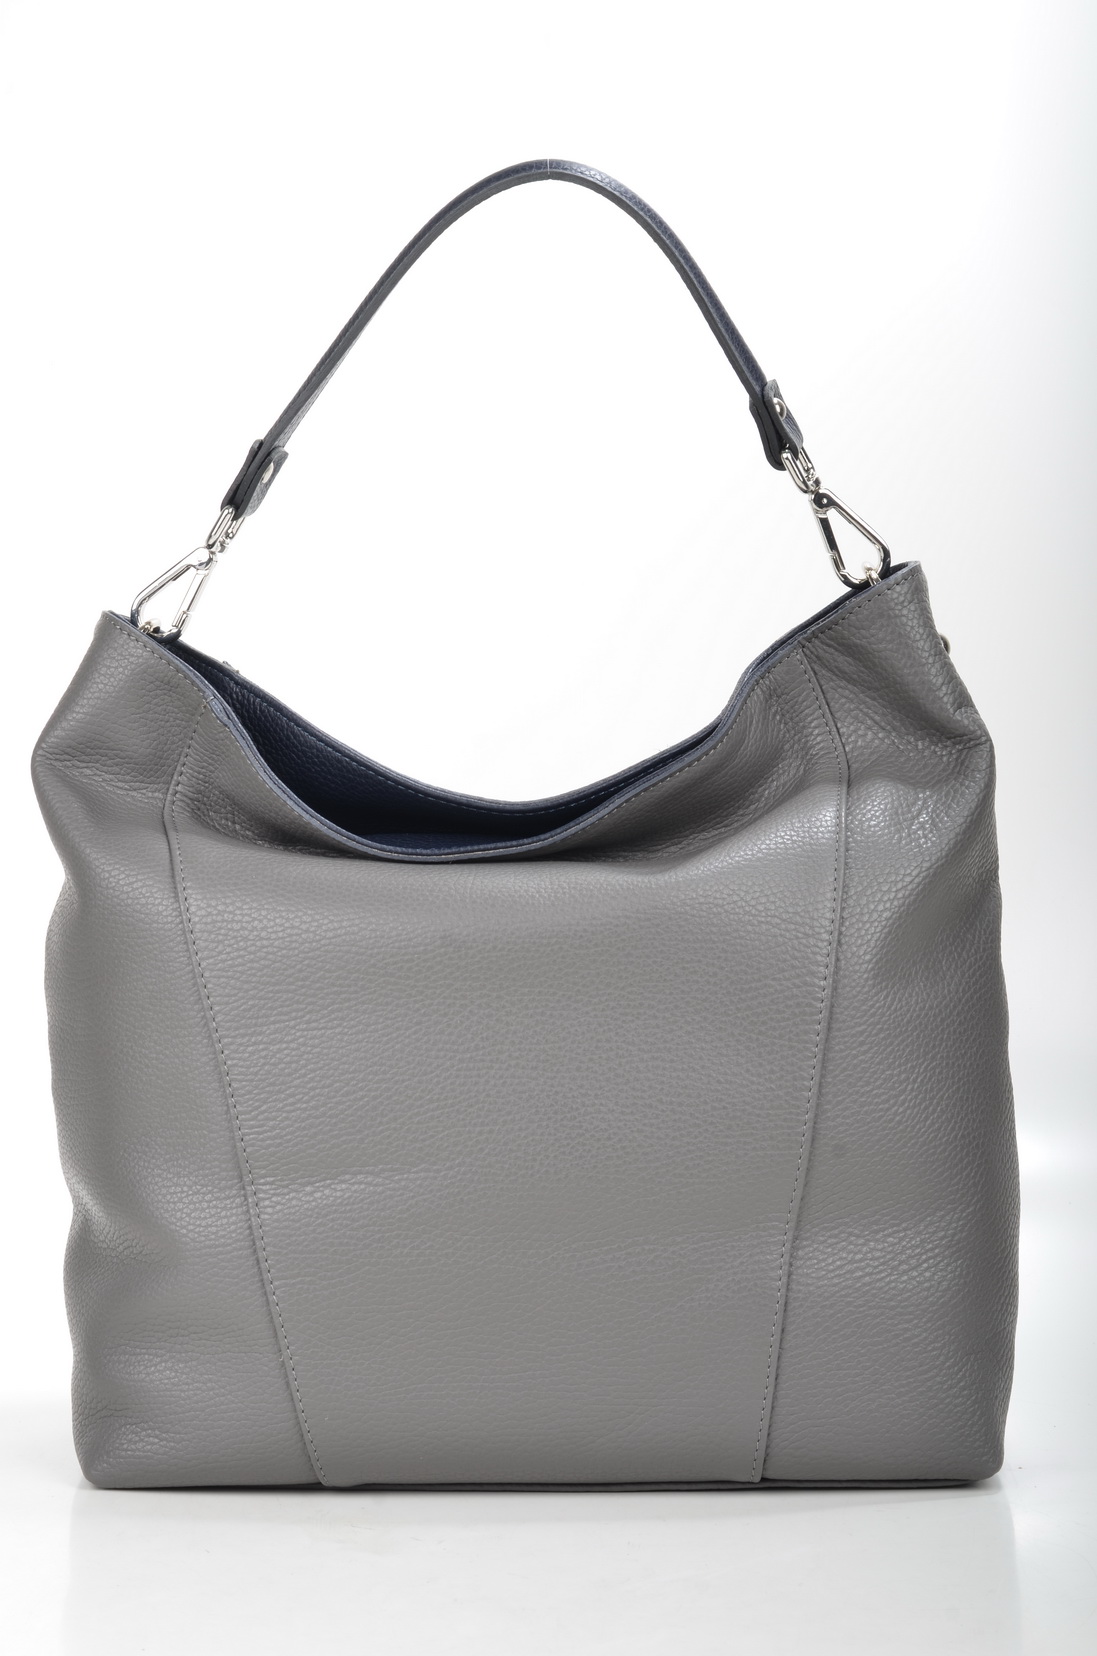 a large gray handbag on white background